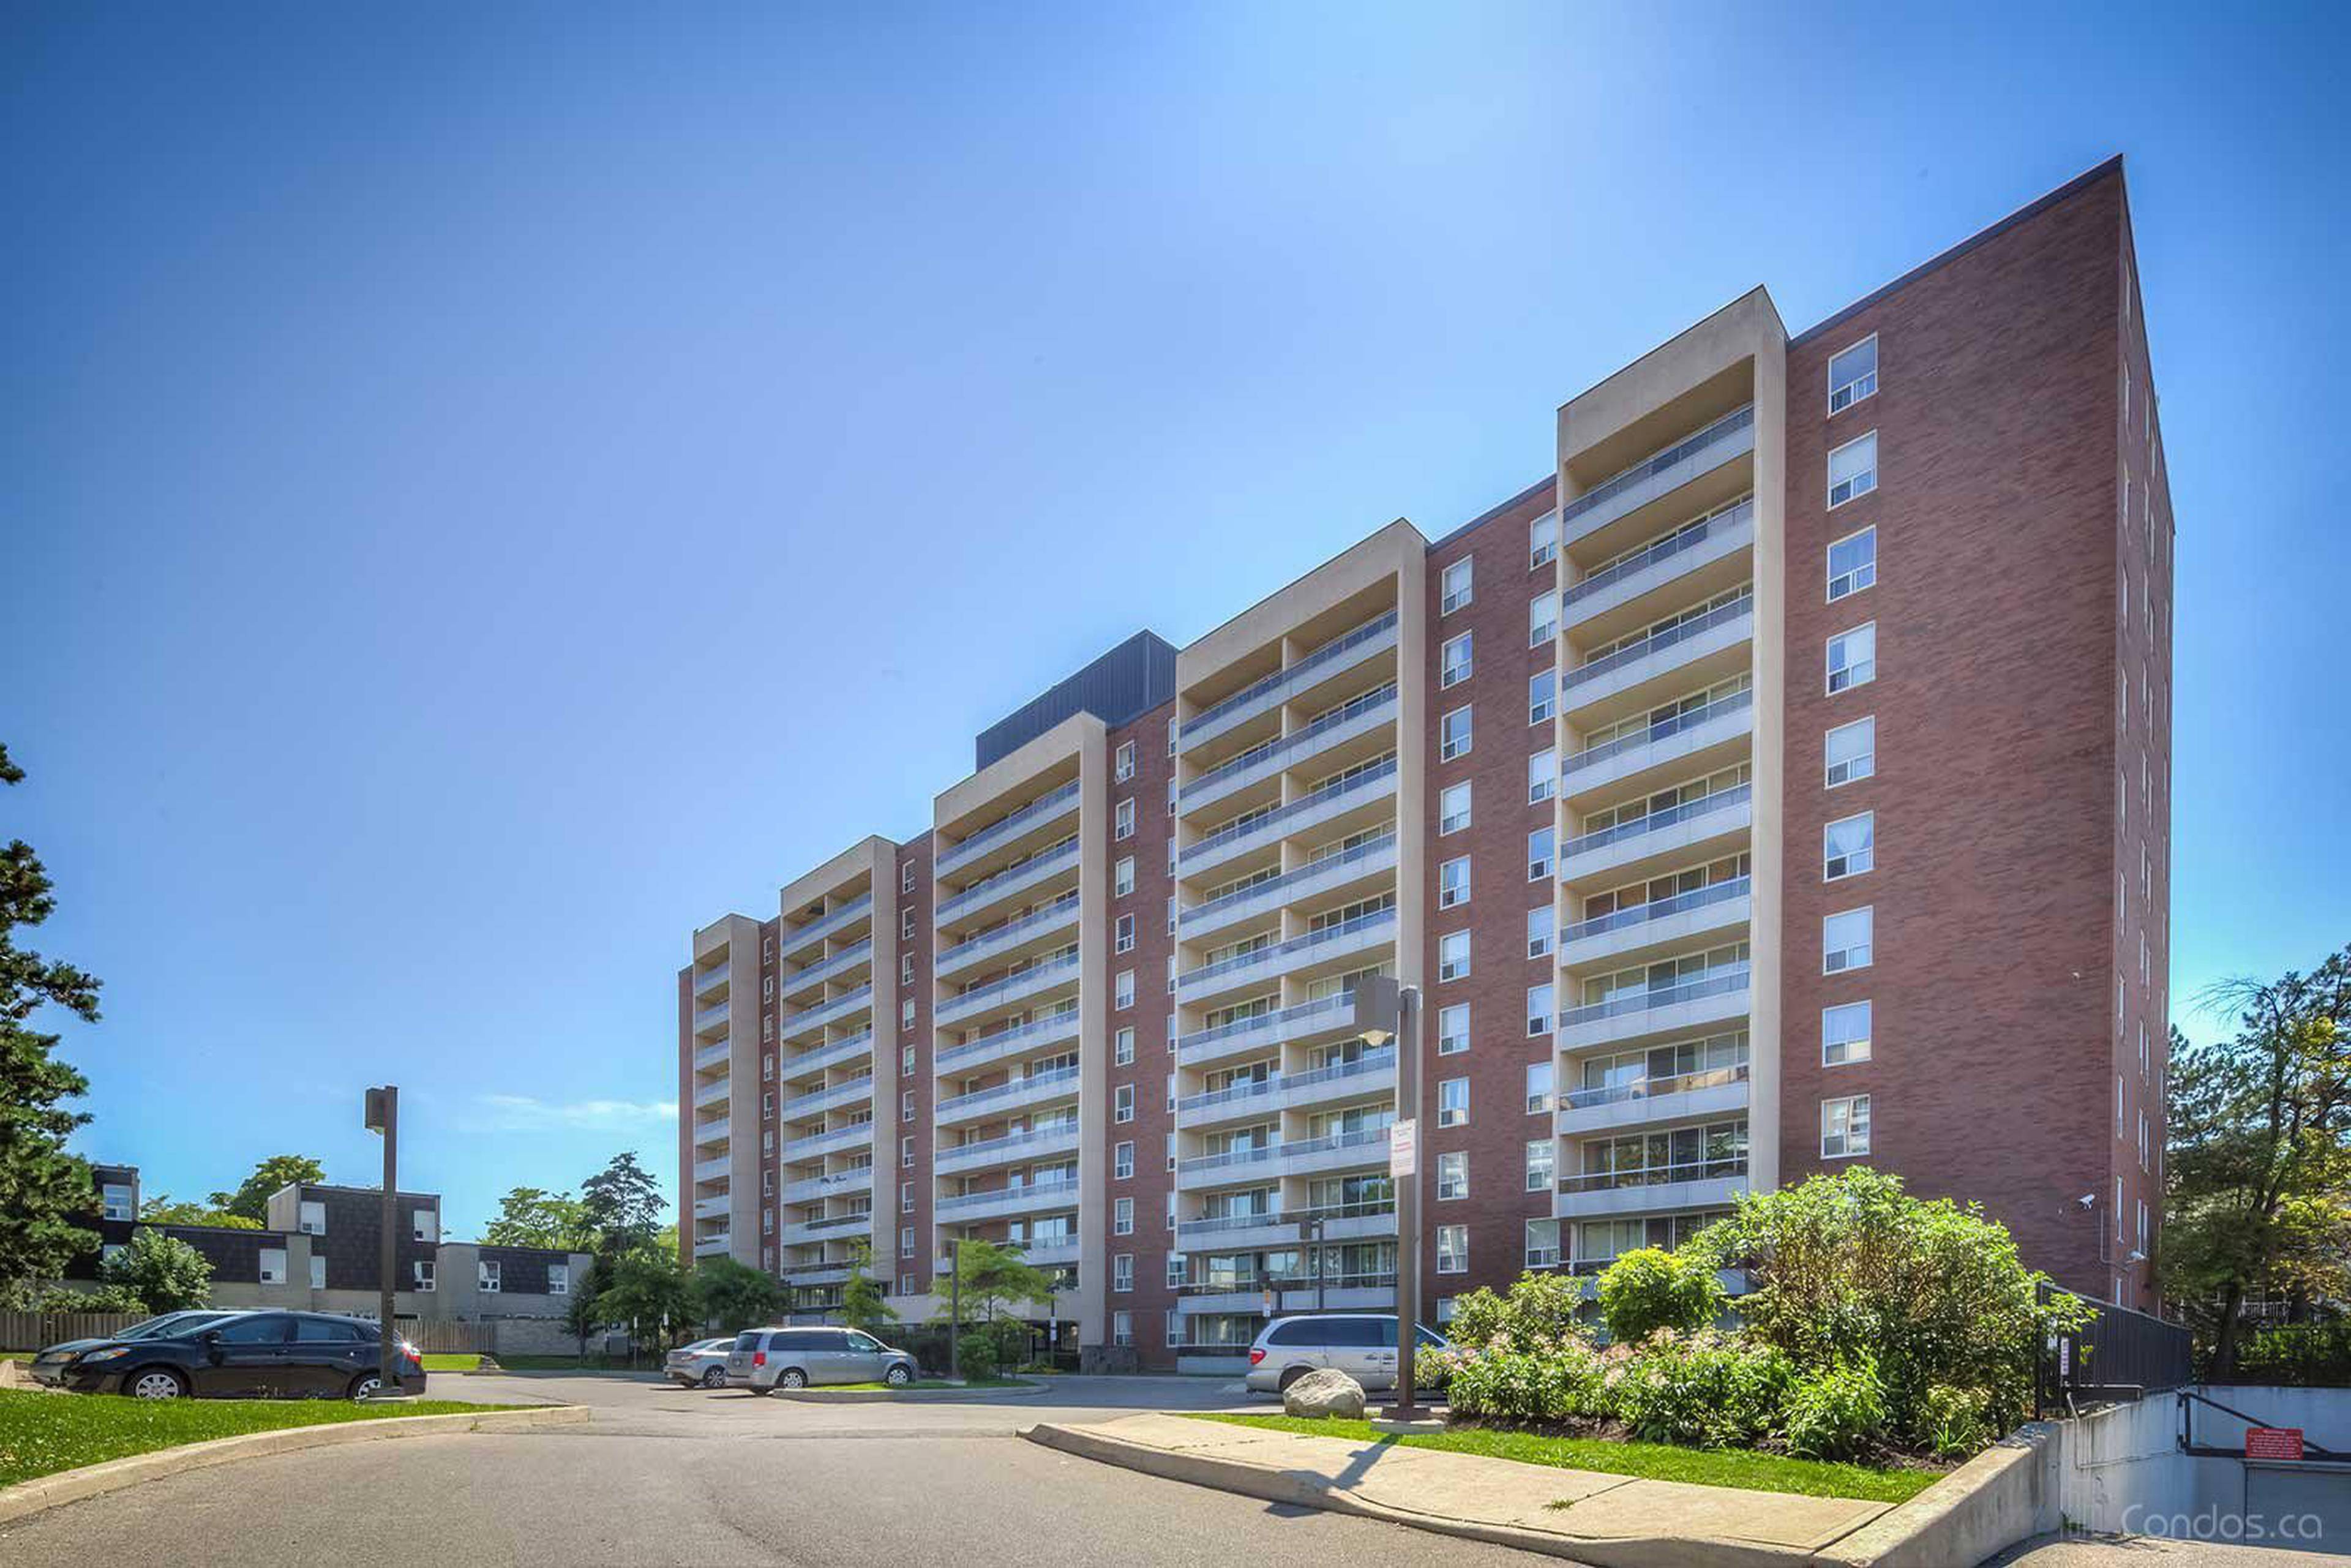 Four Winds Condos 37 Four Winds Dr - Apartments for Rent Toronto | liv.rent